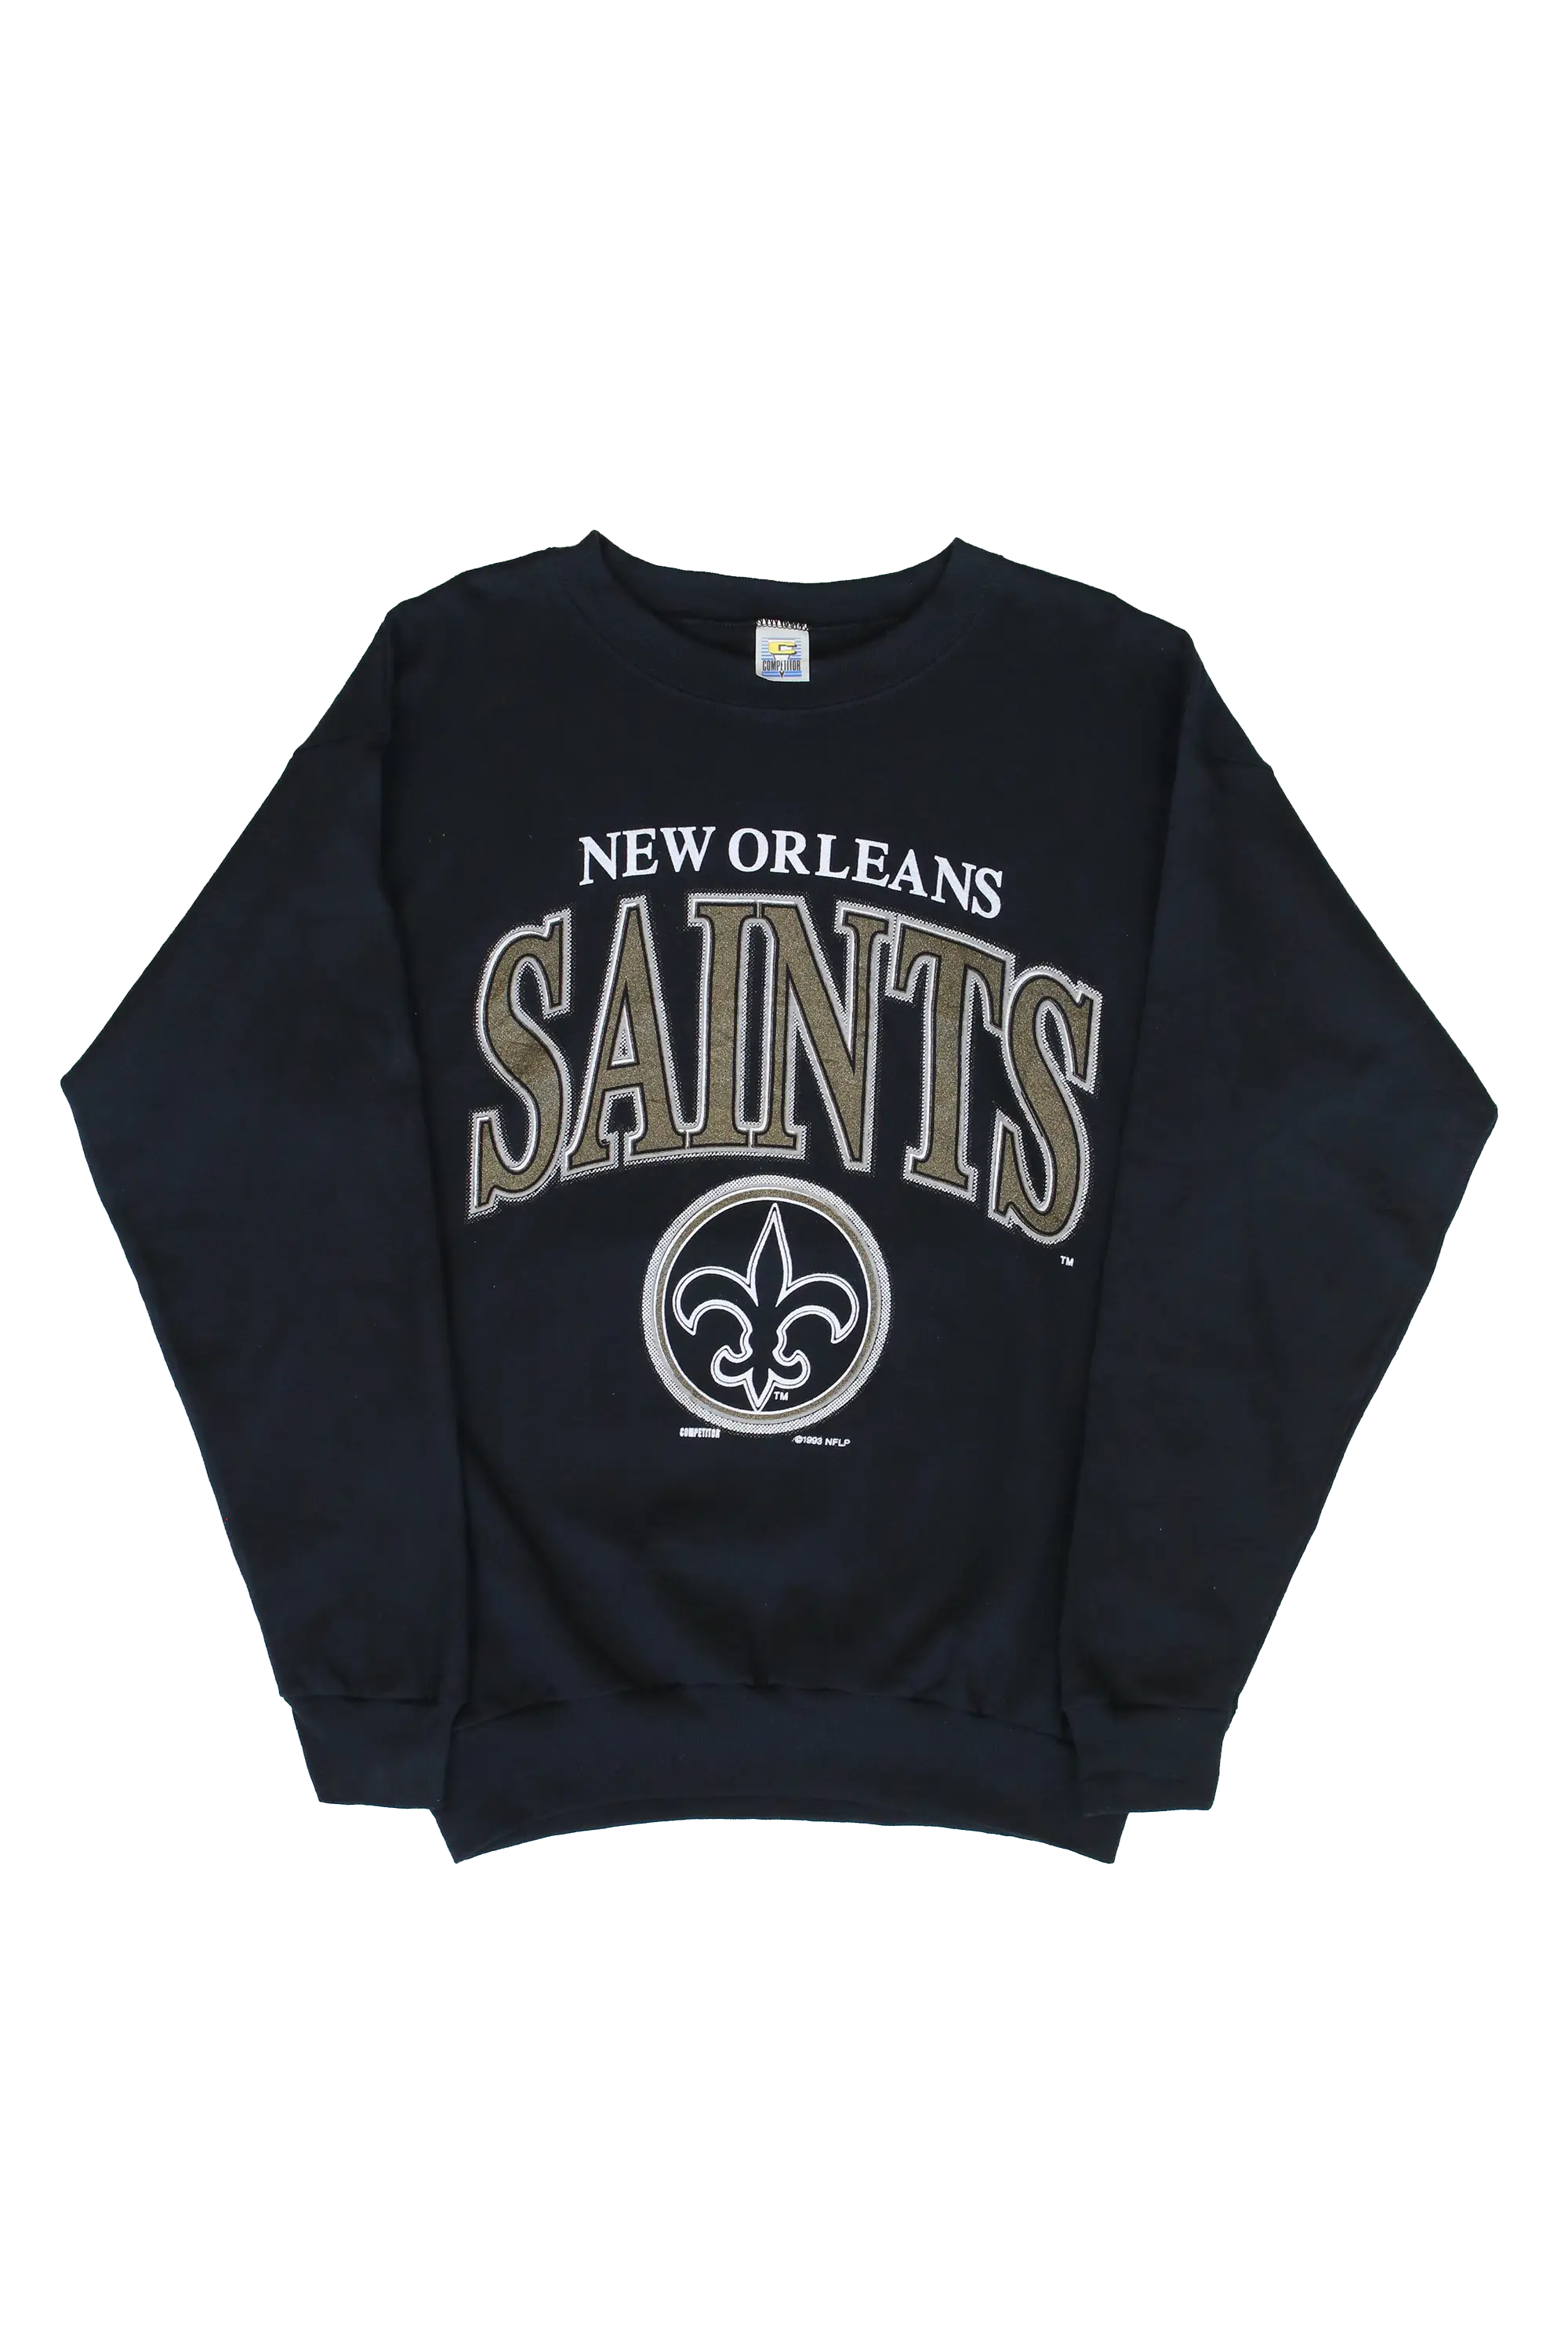 New Orleans Saints '93 Sweater